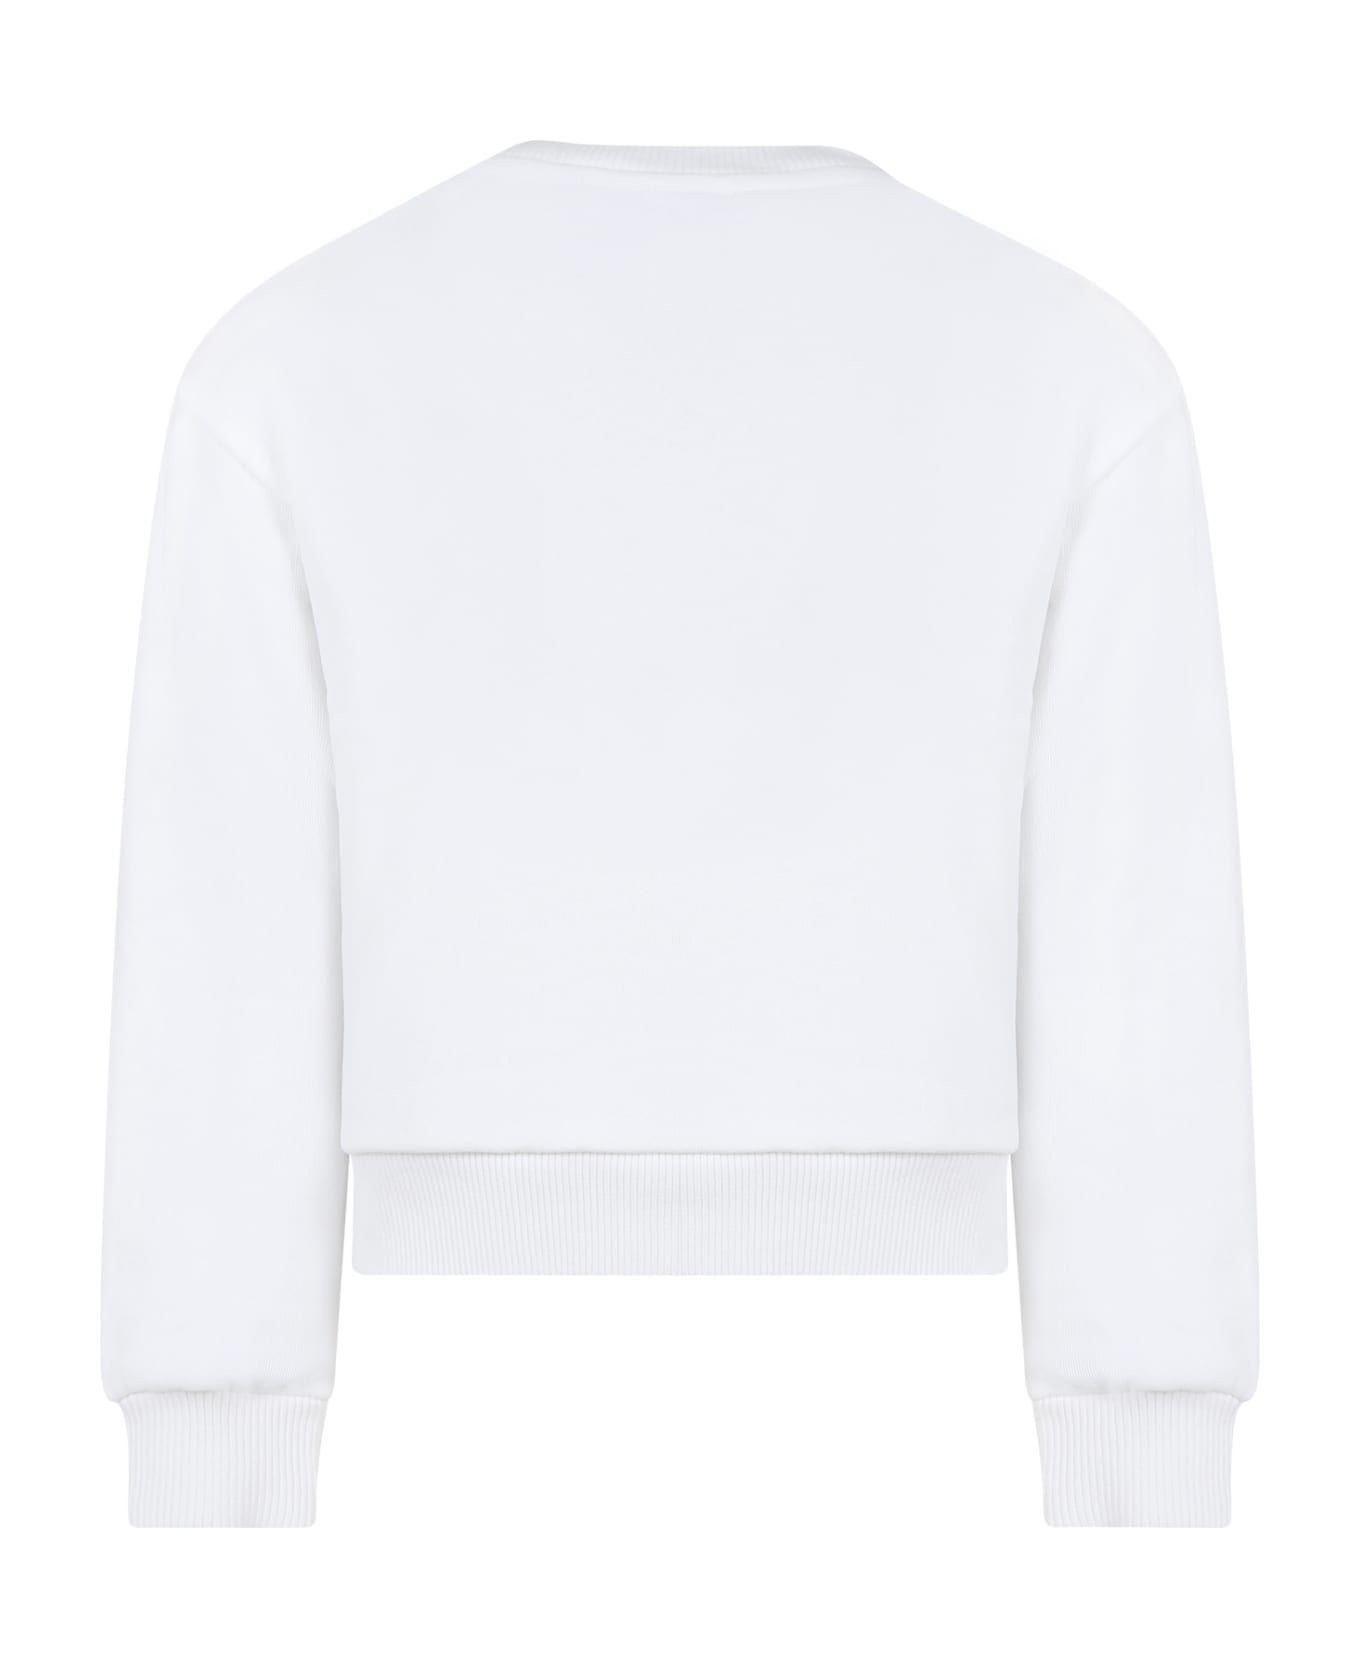 Dolce bloomers & Gabbana Whit Sweatshirt For Kids With Iconic Monogram - Bianco